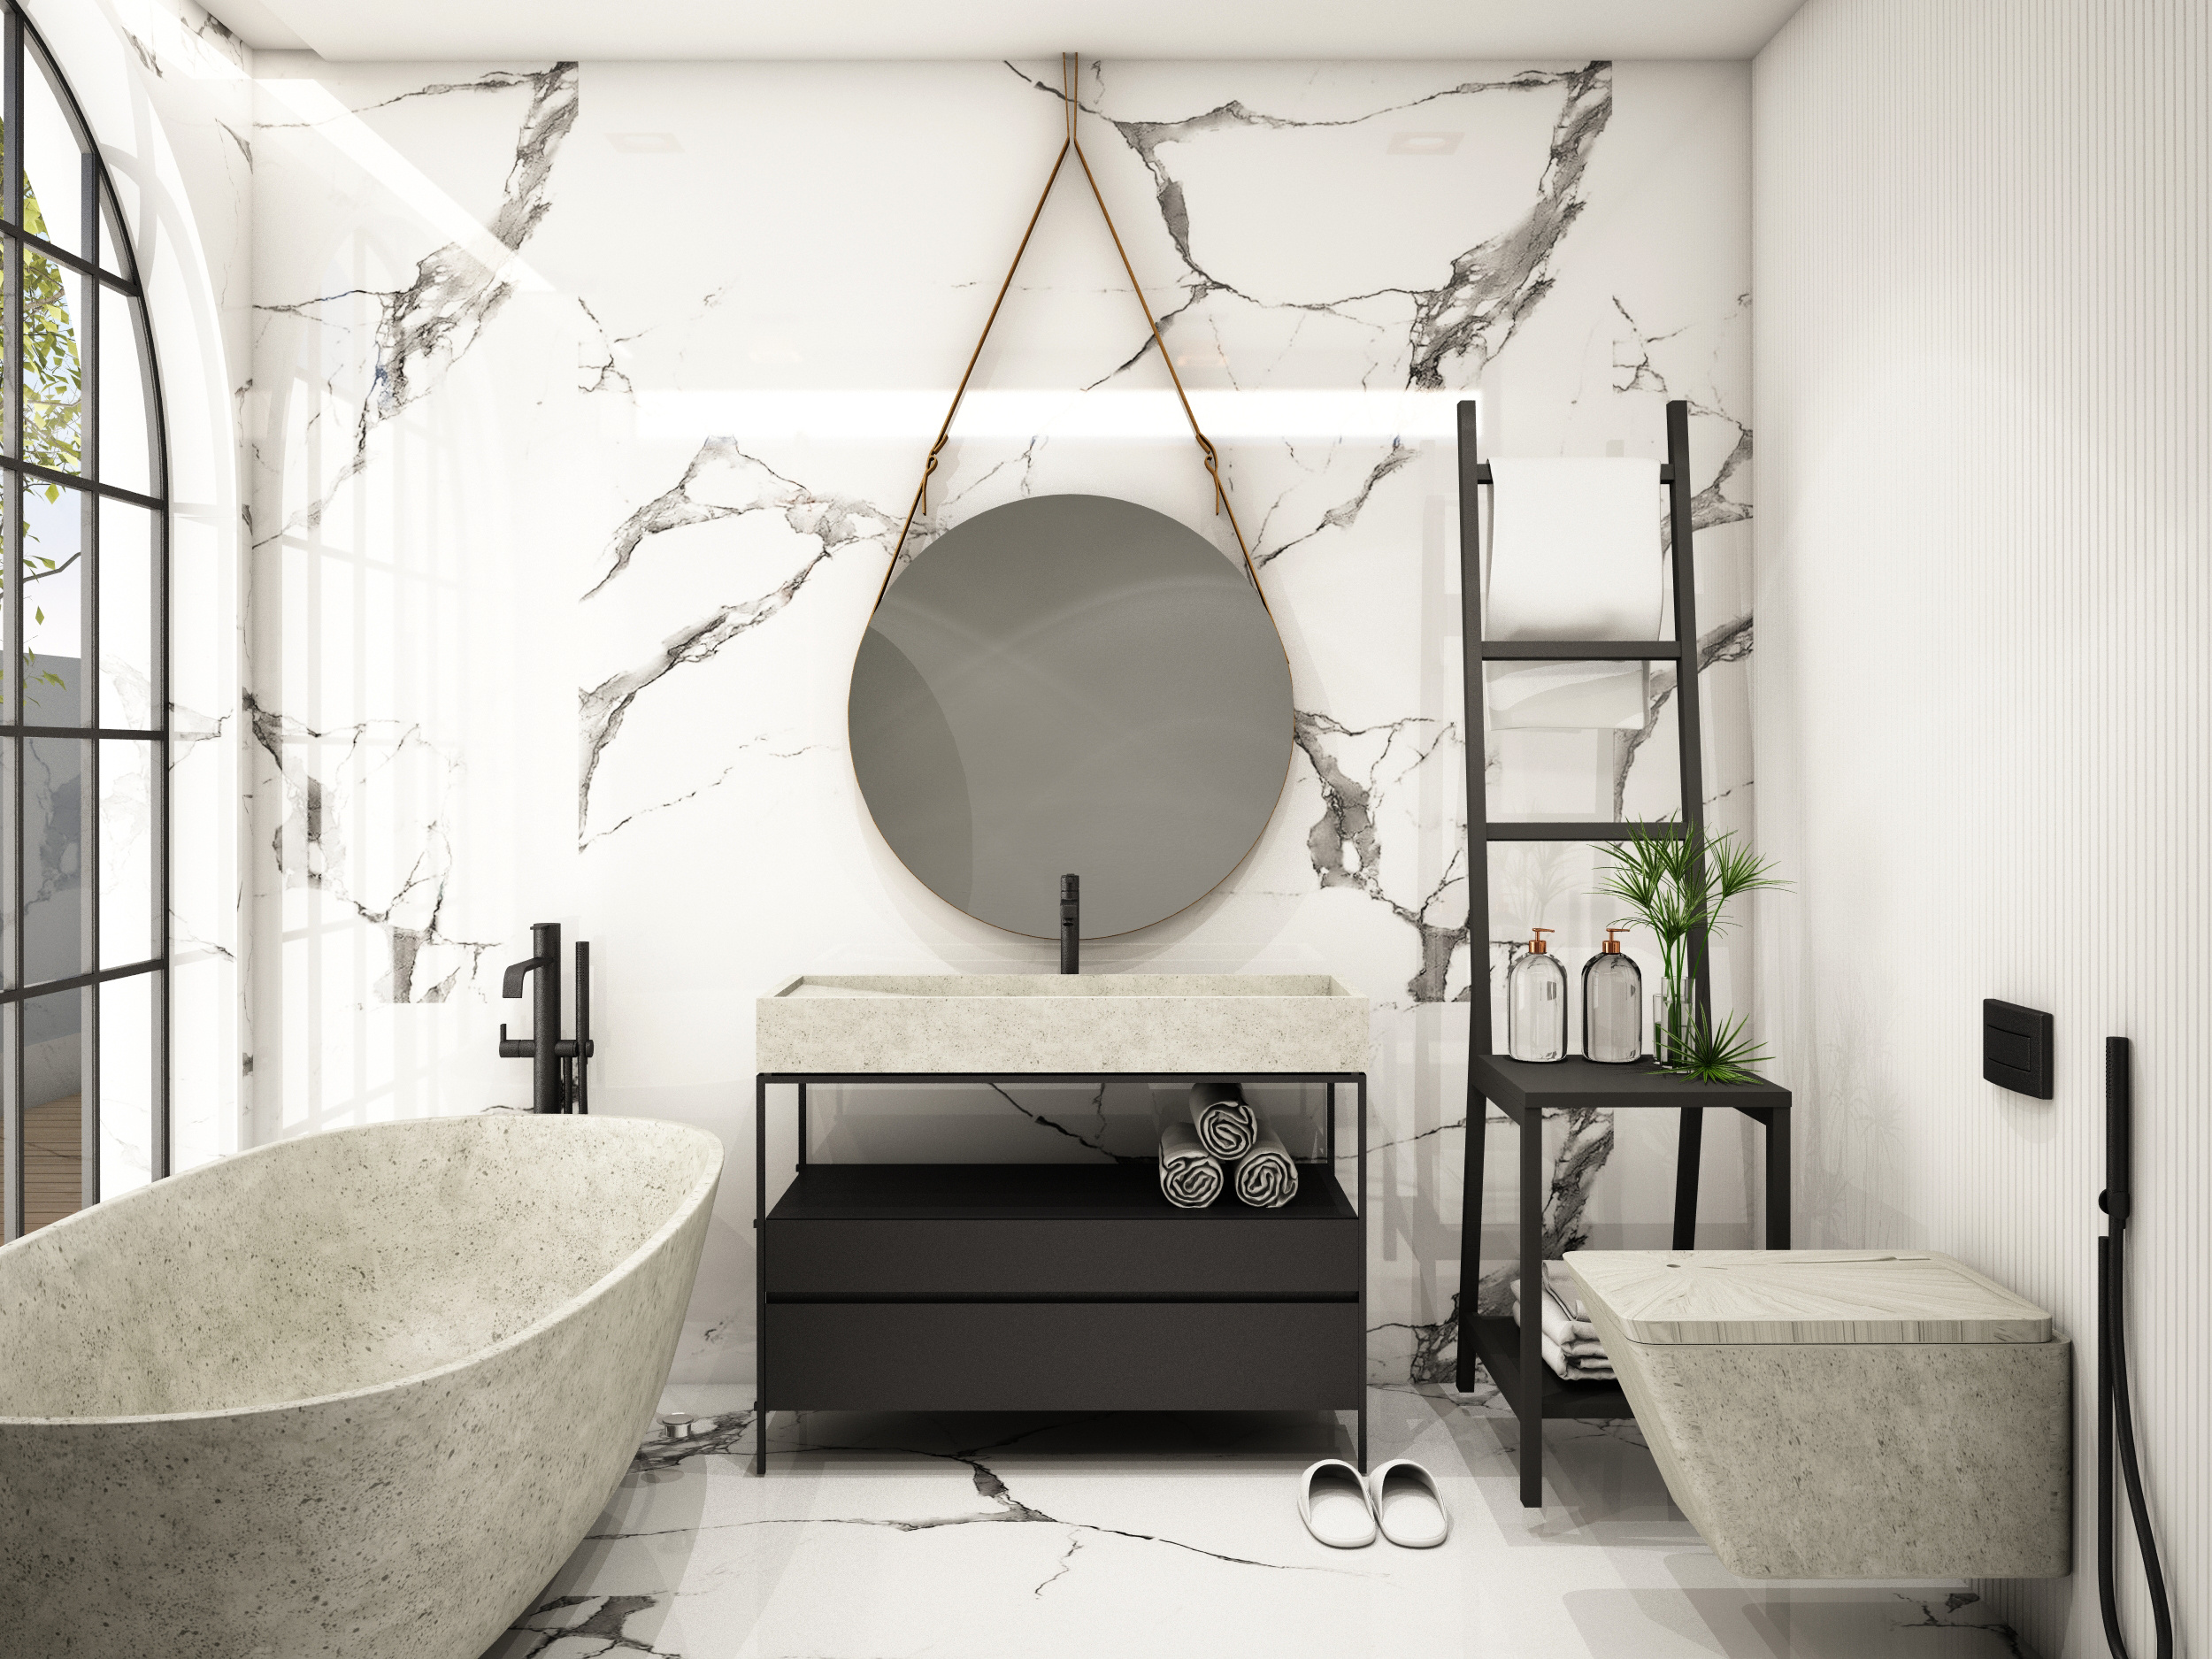 https://www.decoraid.com/wp-content/uploads/2022/03/bathroom-modern-interior-black-white-design-ideas.jpeg